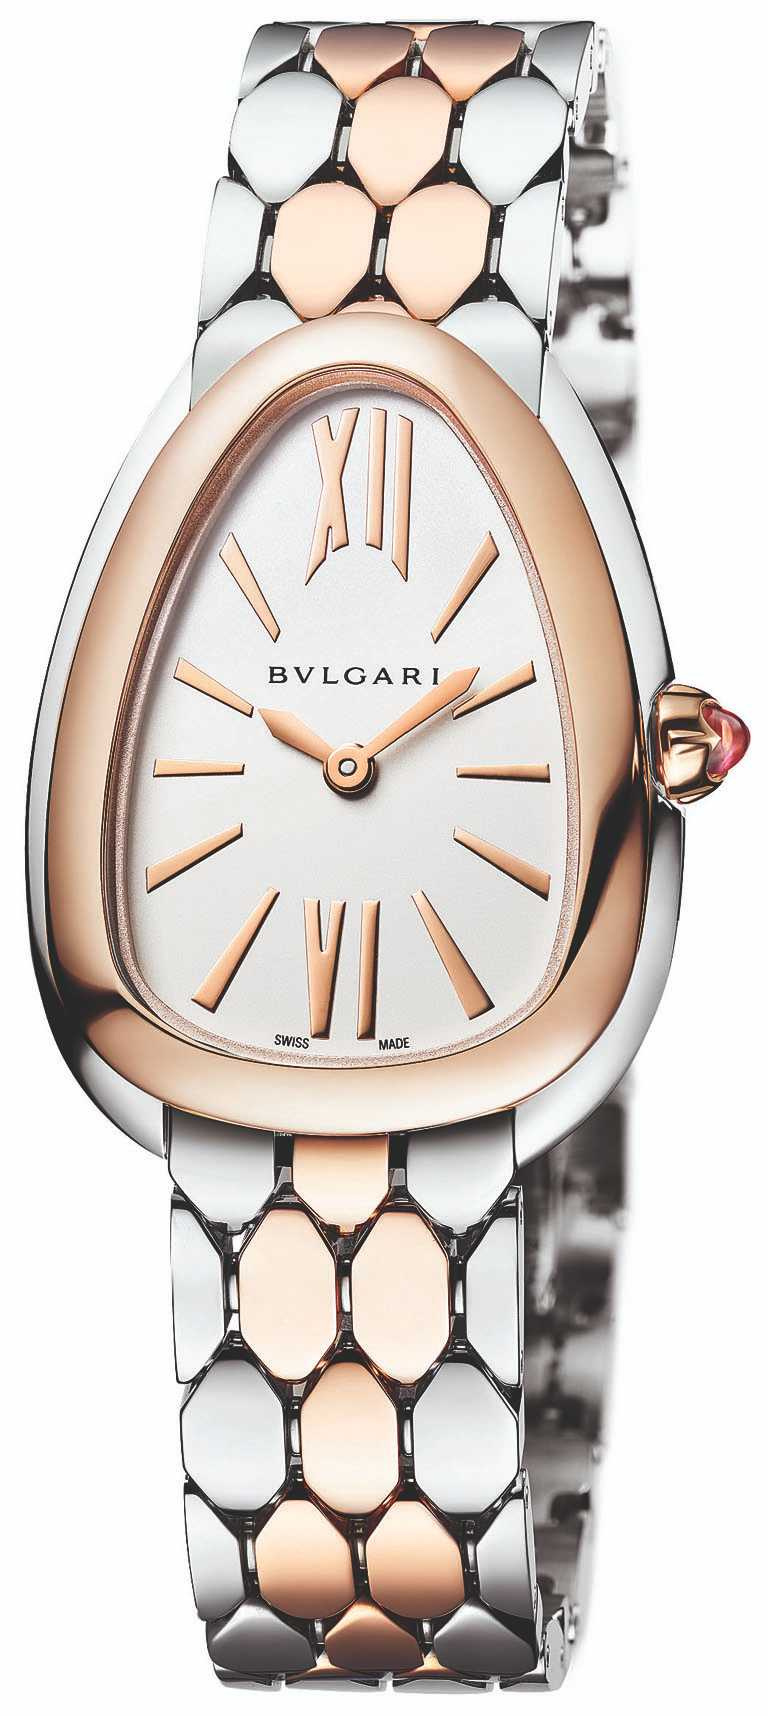 BVLGARI「Serpenti Seduttori」玫瑰金與精鋼腕錶，33mm，精鋼錶殼搭配玫瑰金錶圈，寶格麗自製精準石英機芯╱251,600元。（圖╱BVLGARI提供）